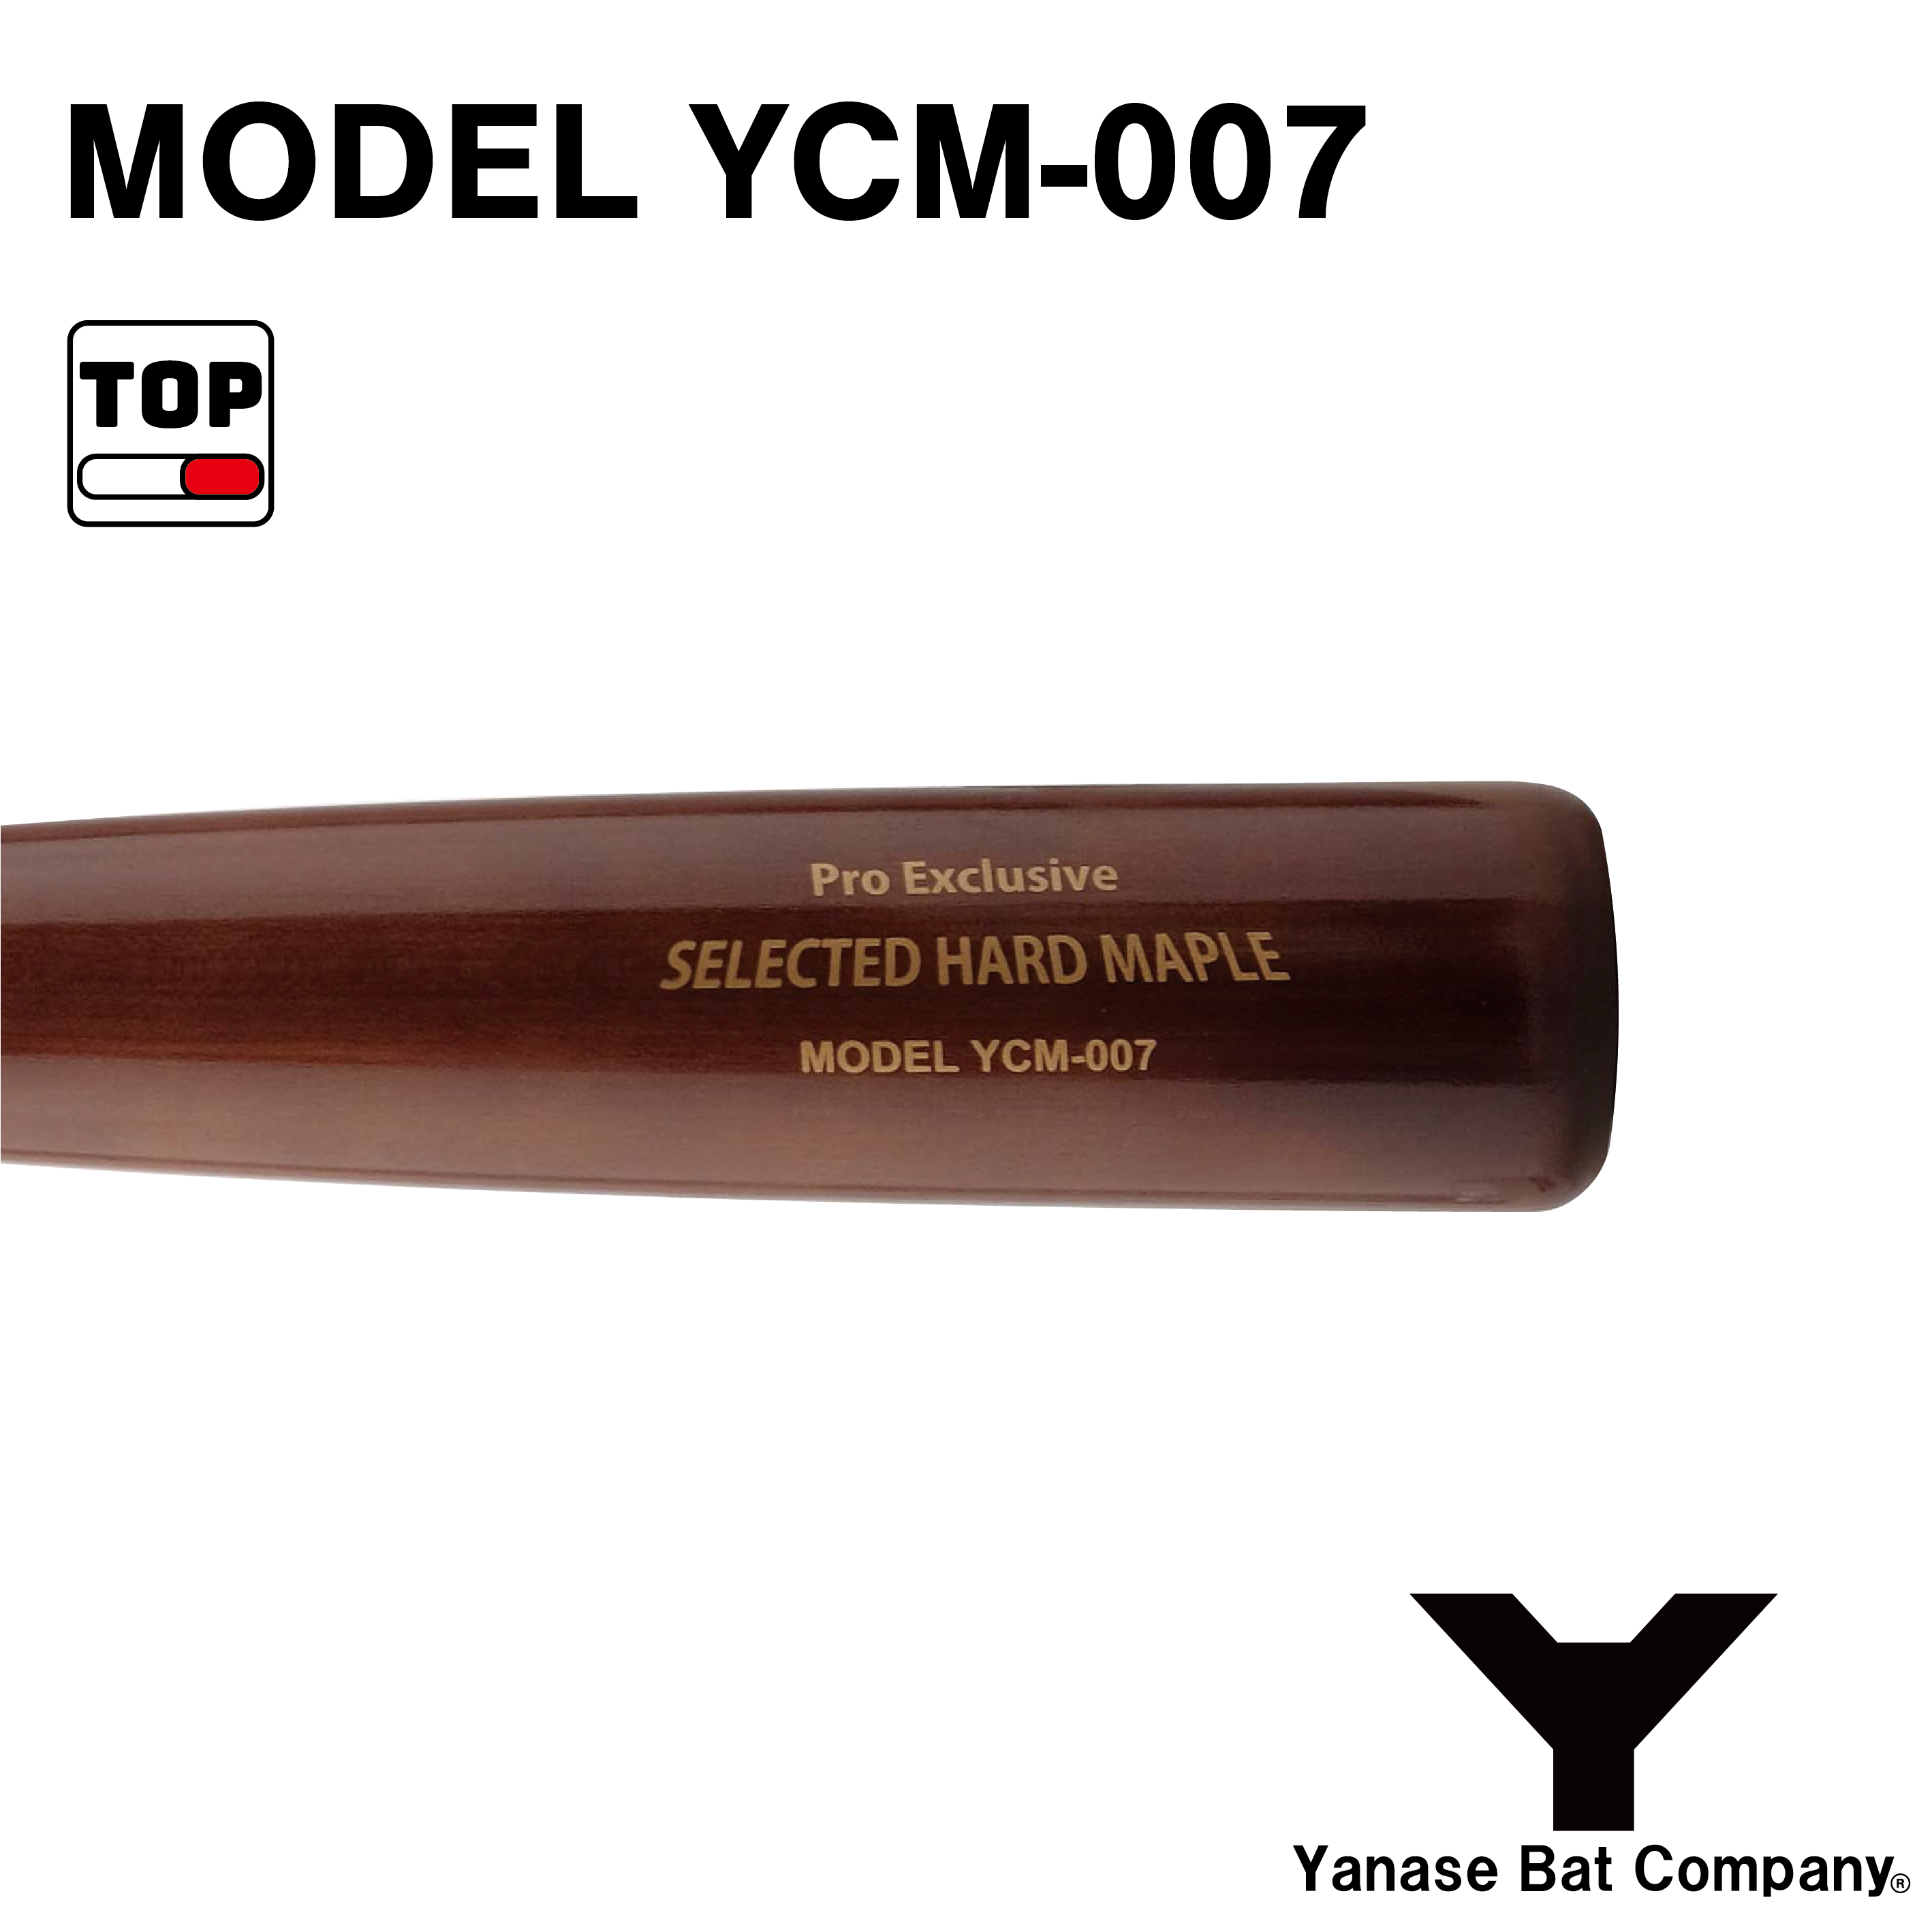 YCM-007 - YANASE BAT COMPANY